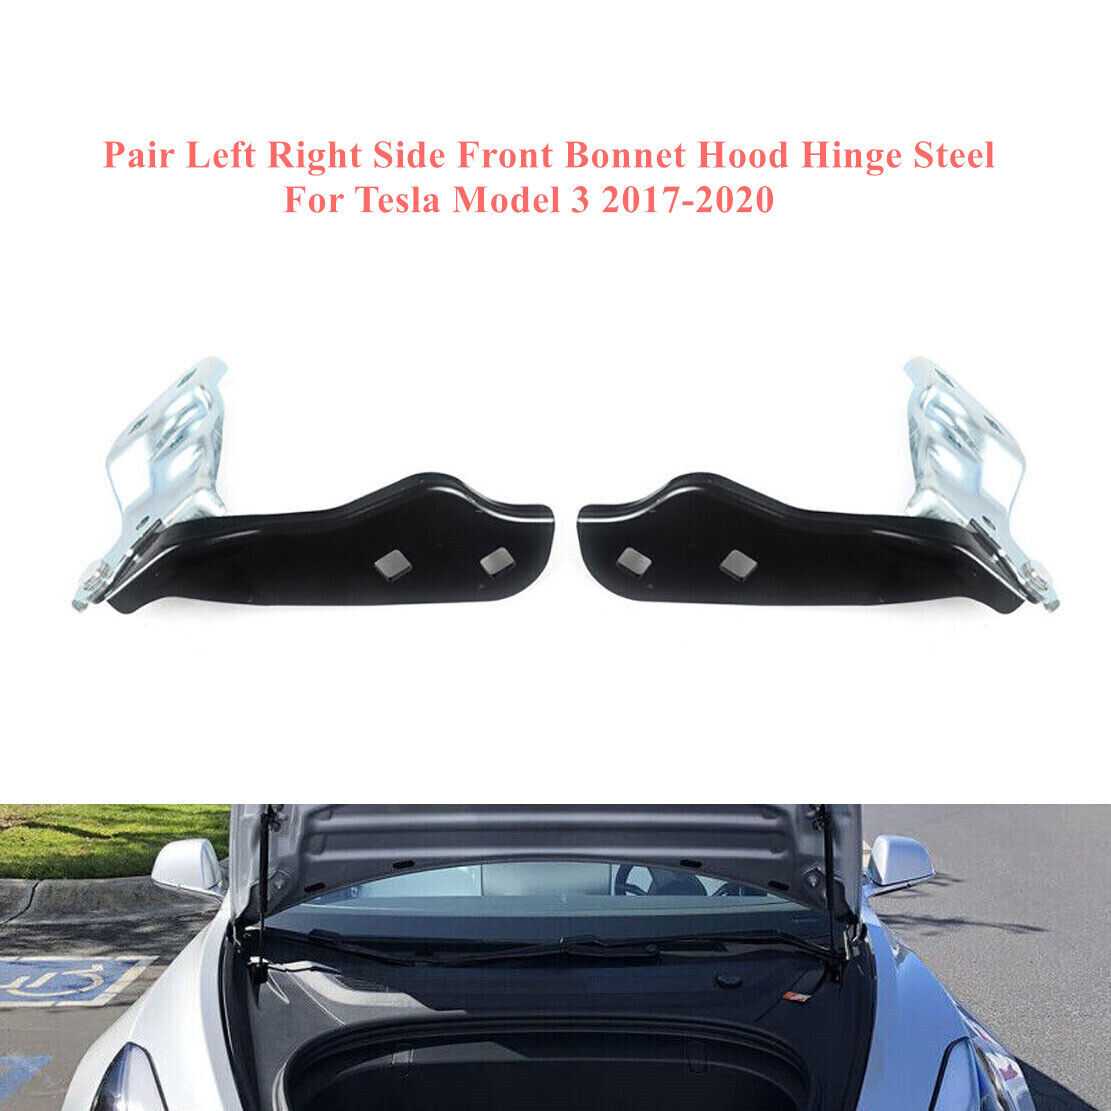 Pair Left Right Side Front Bonnet Hood Hinge Steel For Tesla Model 3 2017-2020